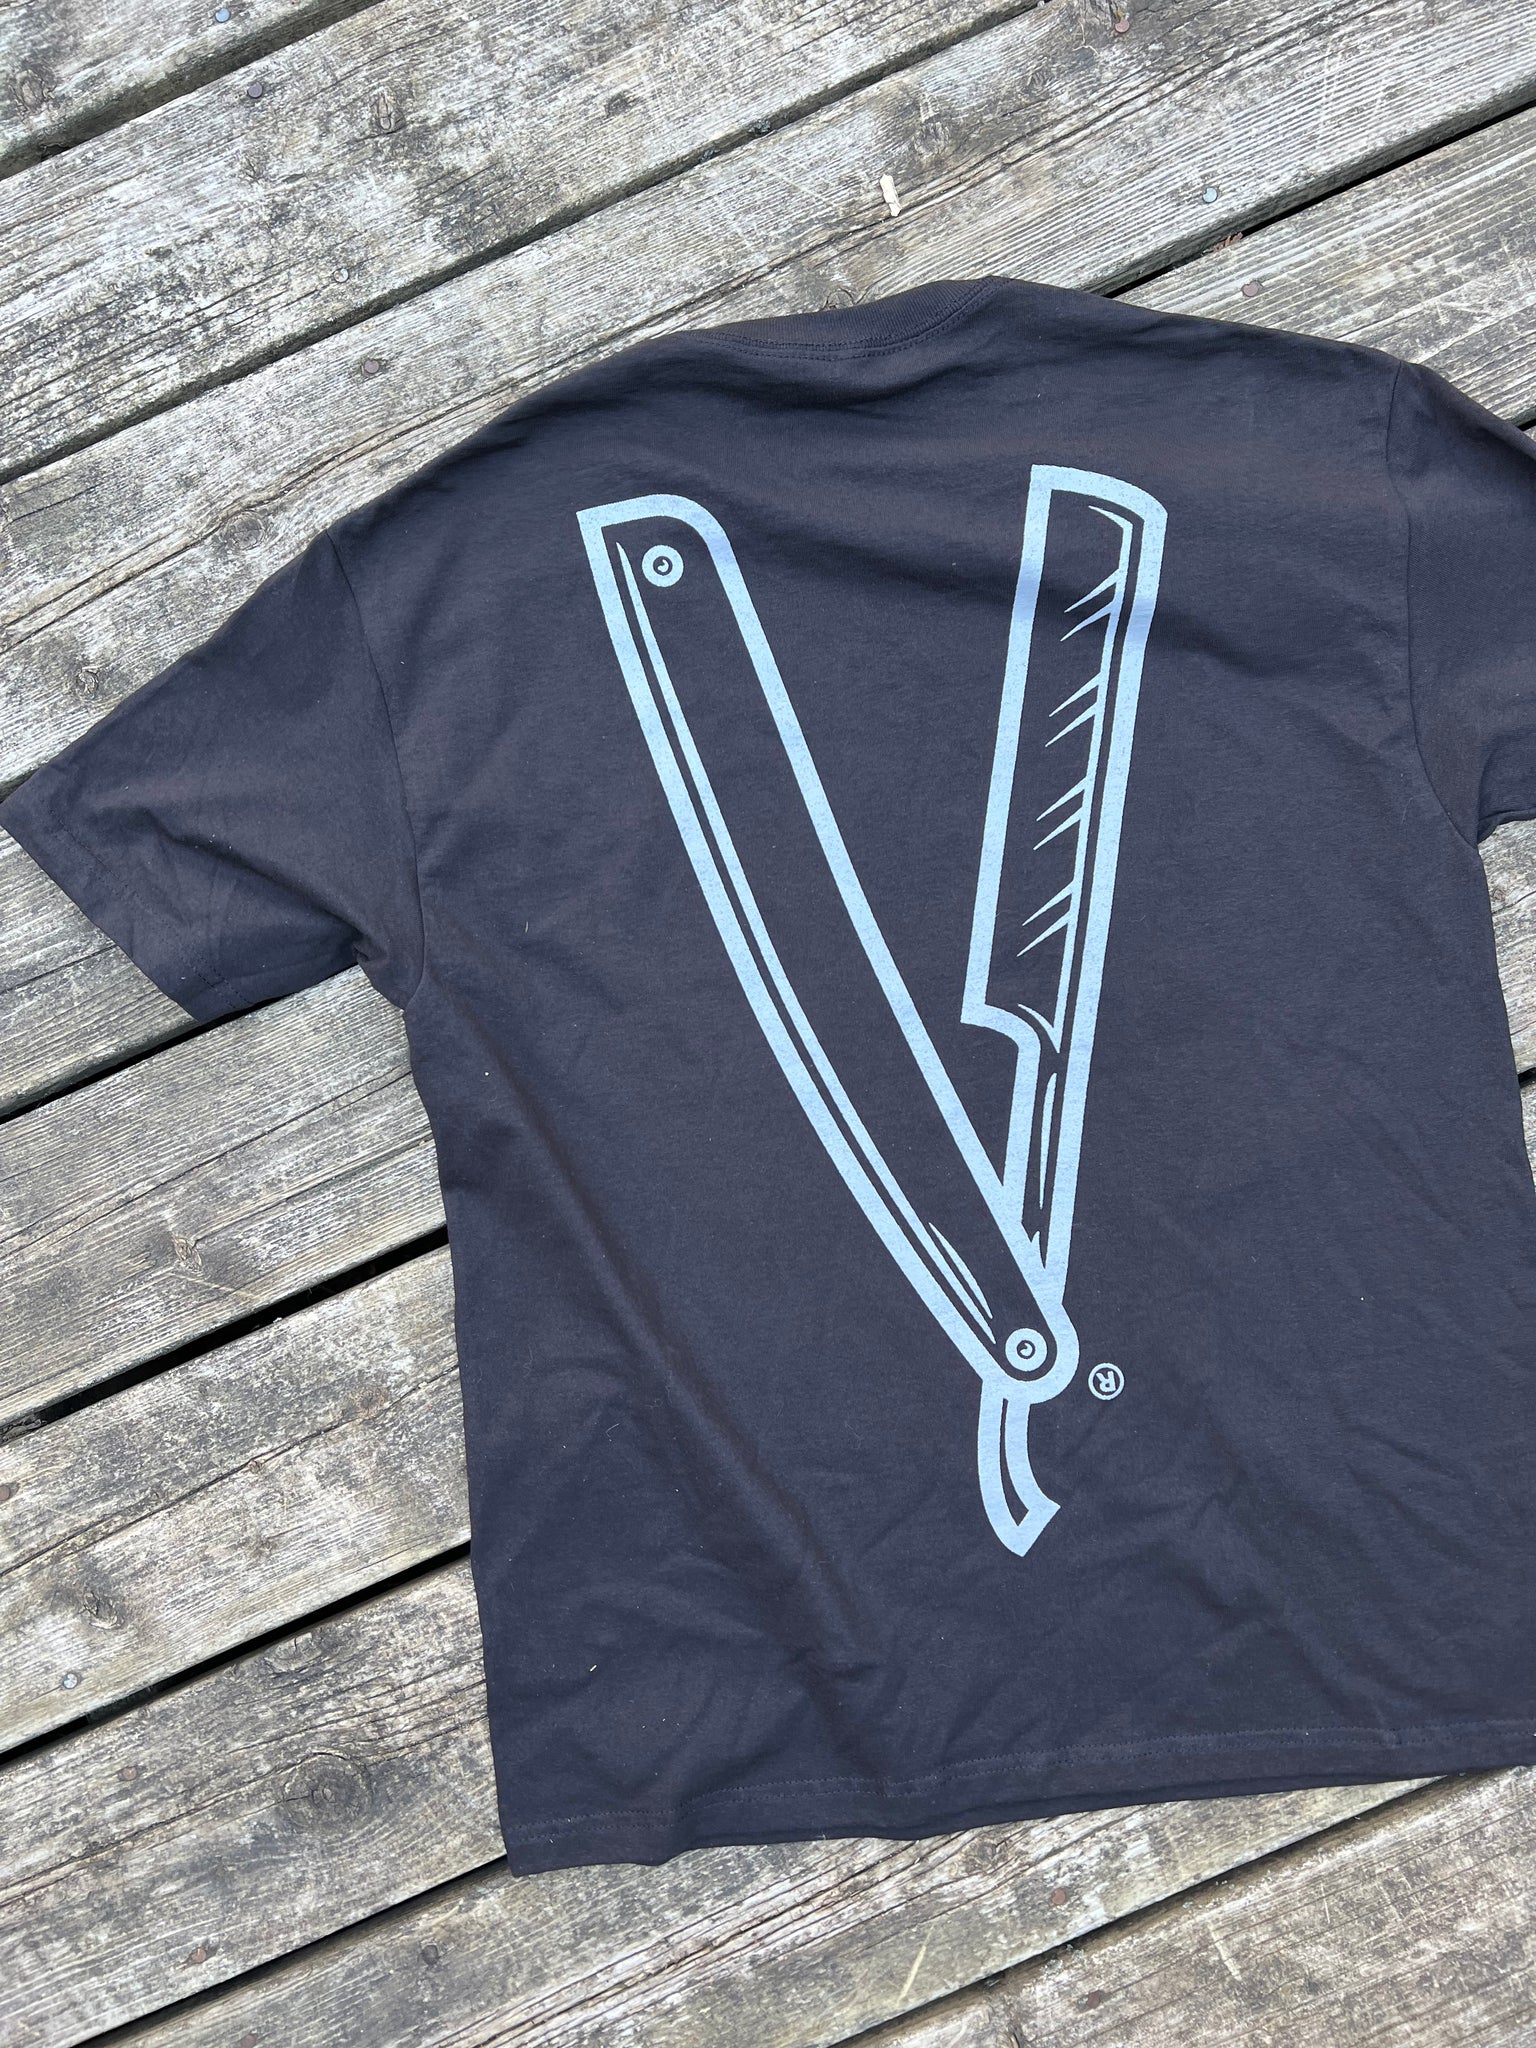 Barb Wire / Big Blade Shirt